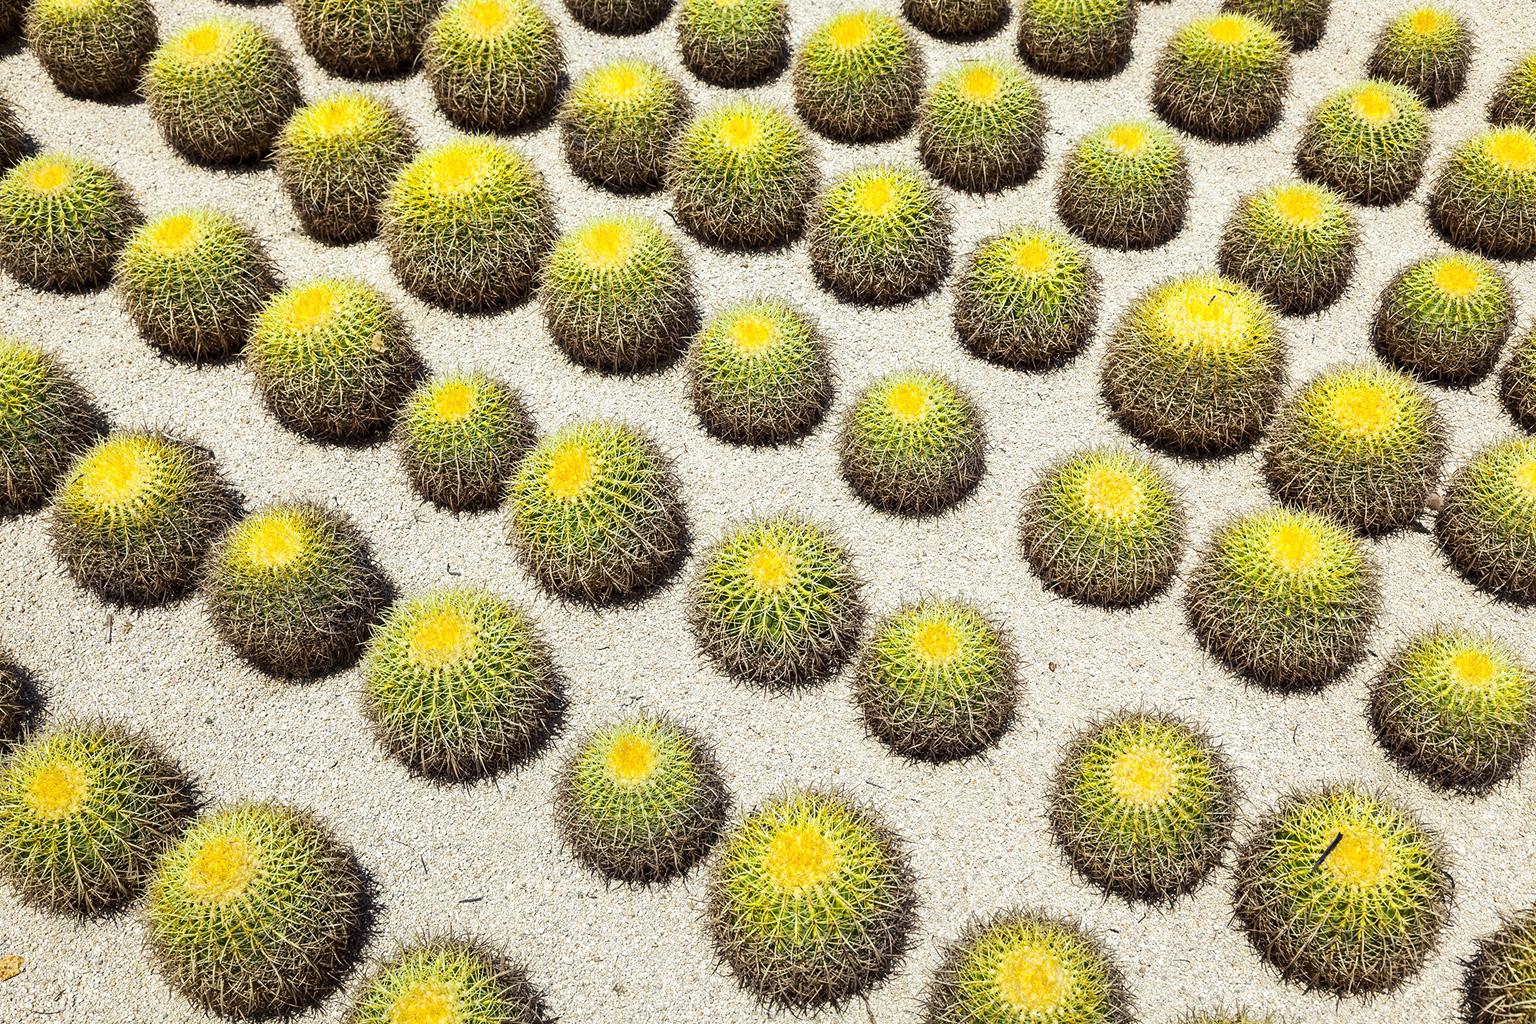 Cacti  - large format photograph of iconic desert cactus landscape 48" x 72"